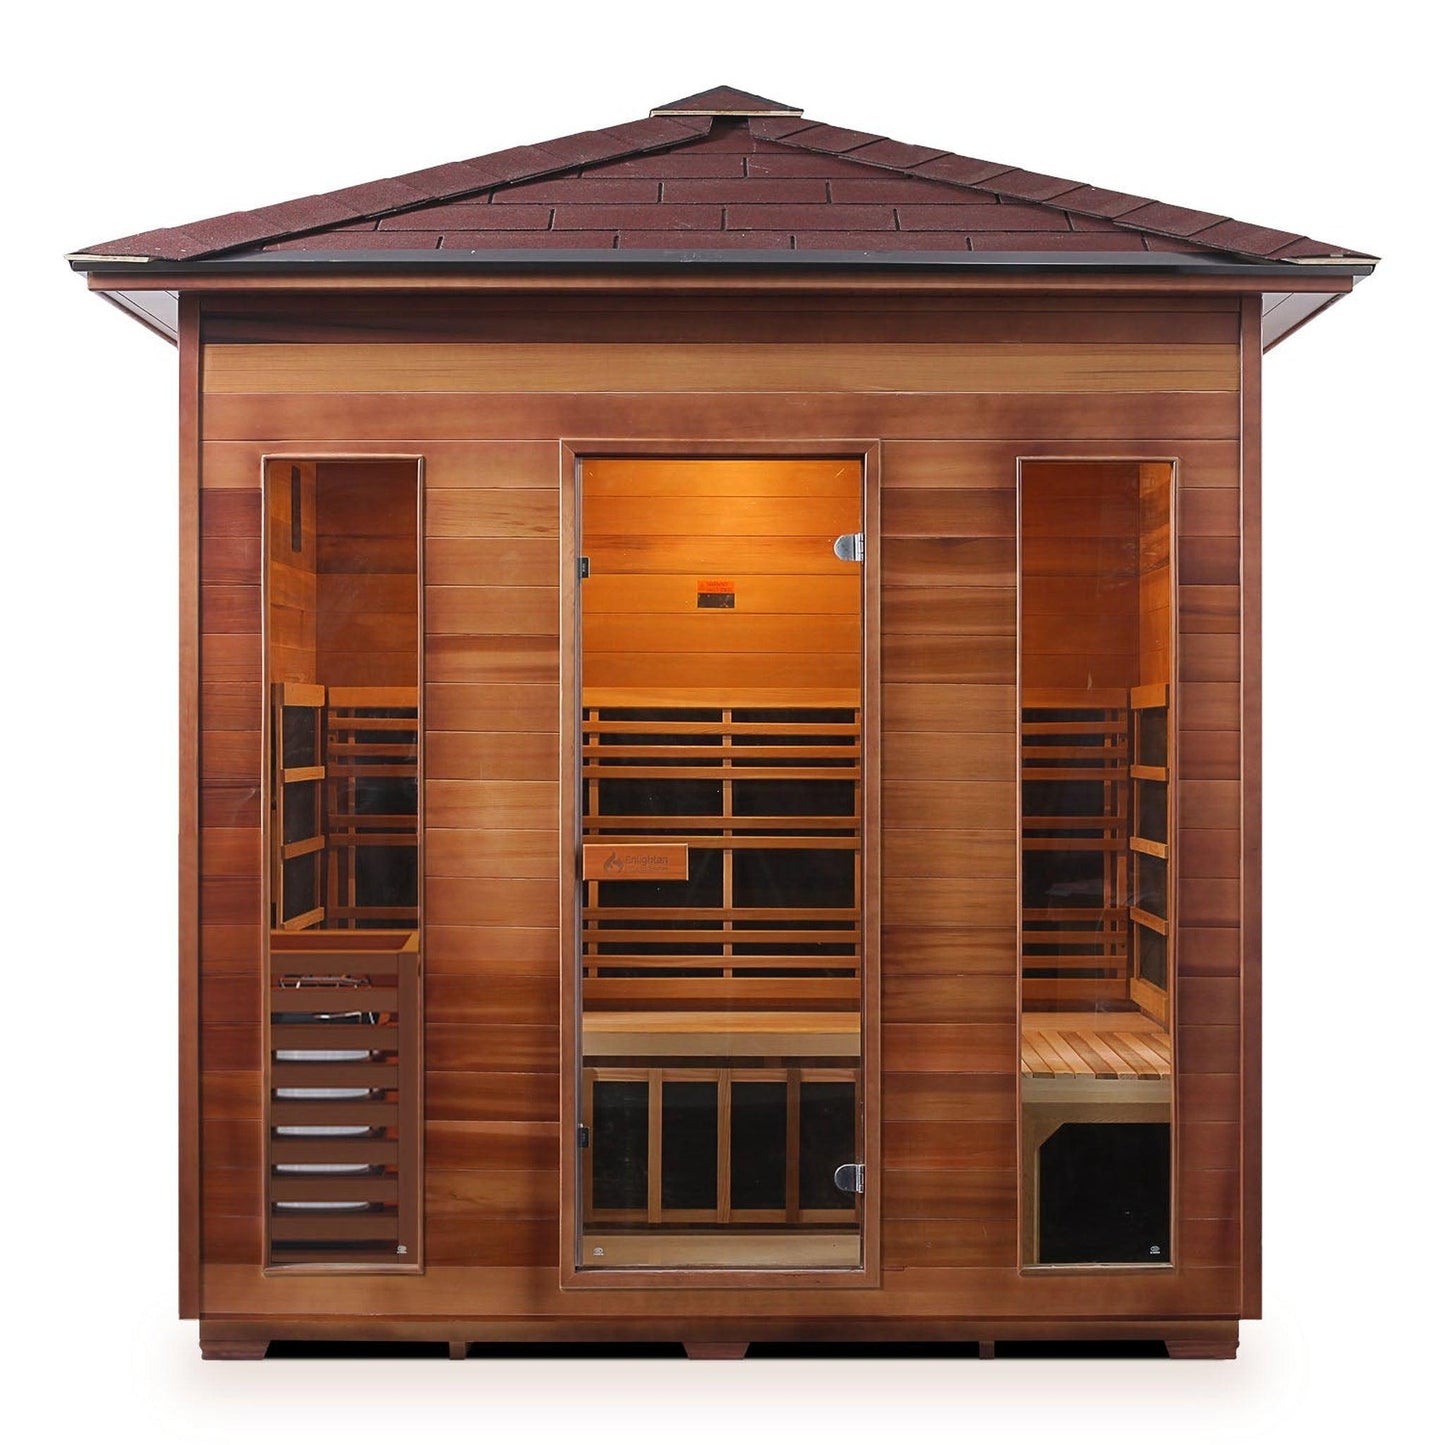 Enlighten InfraNature Duet Diamond 5-Person Peak Roof Hybrid Infrared/Traditional Outdoor Sauna